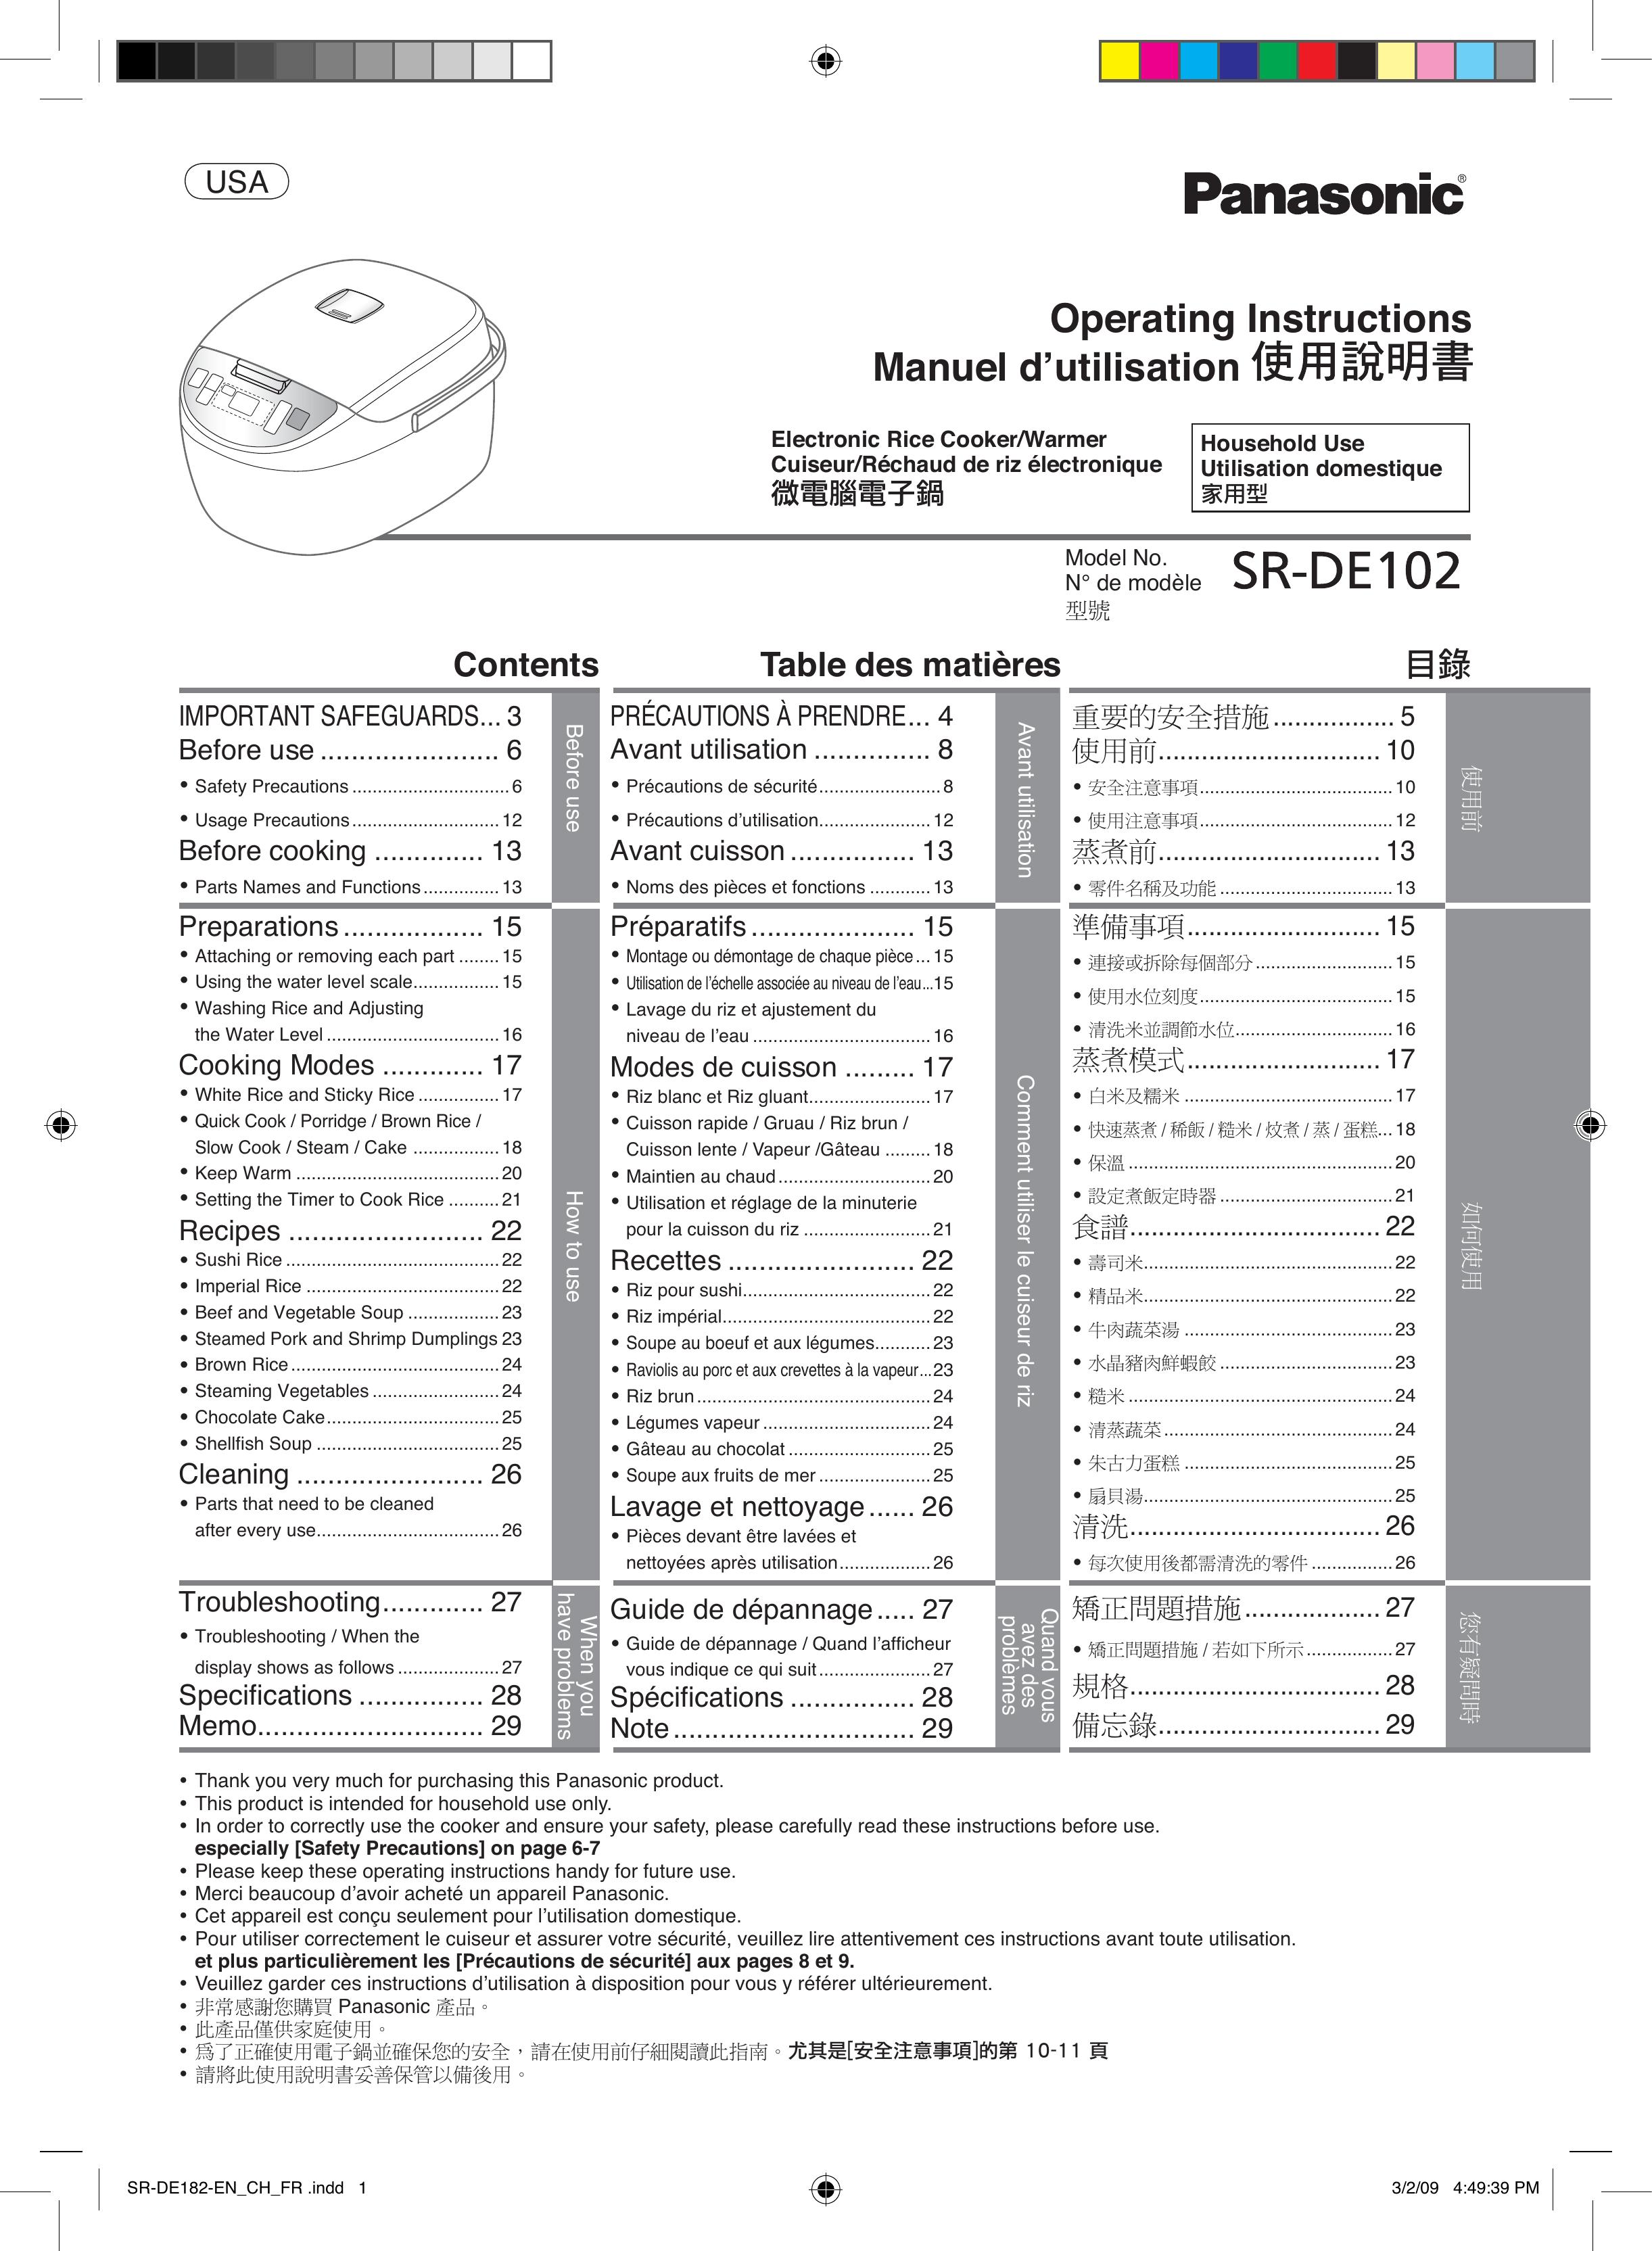 Panasonic SR-DE102 Rice Cooker User Manual